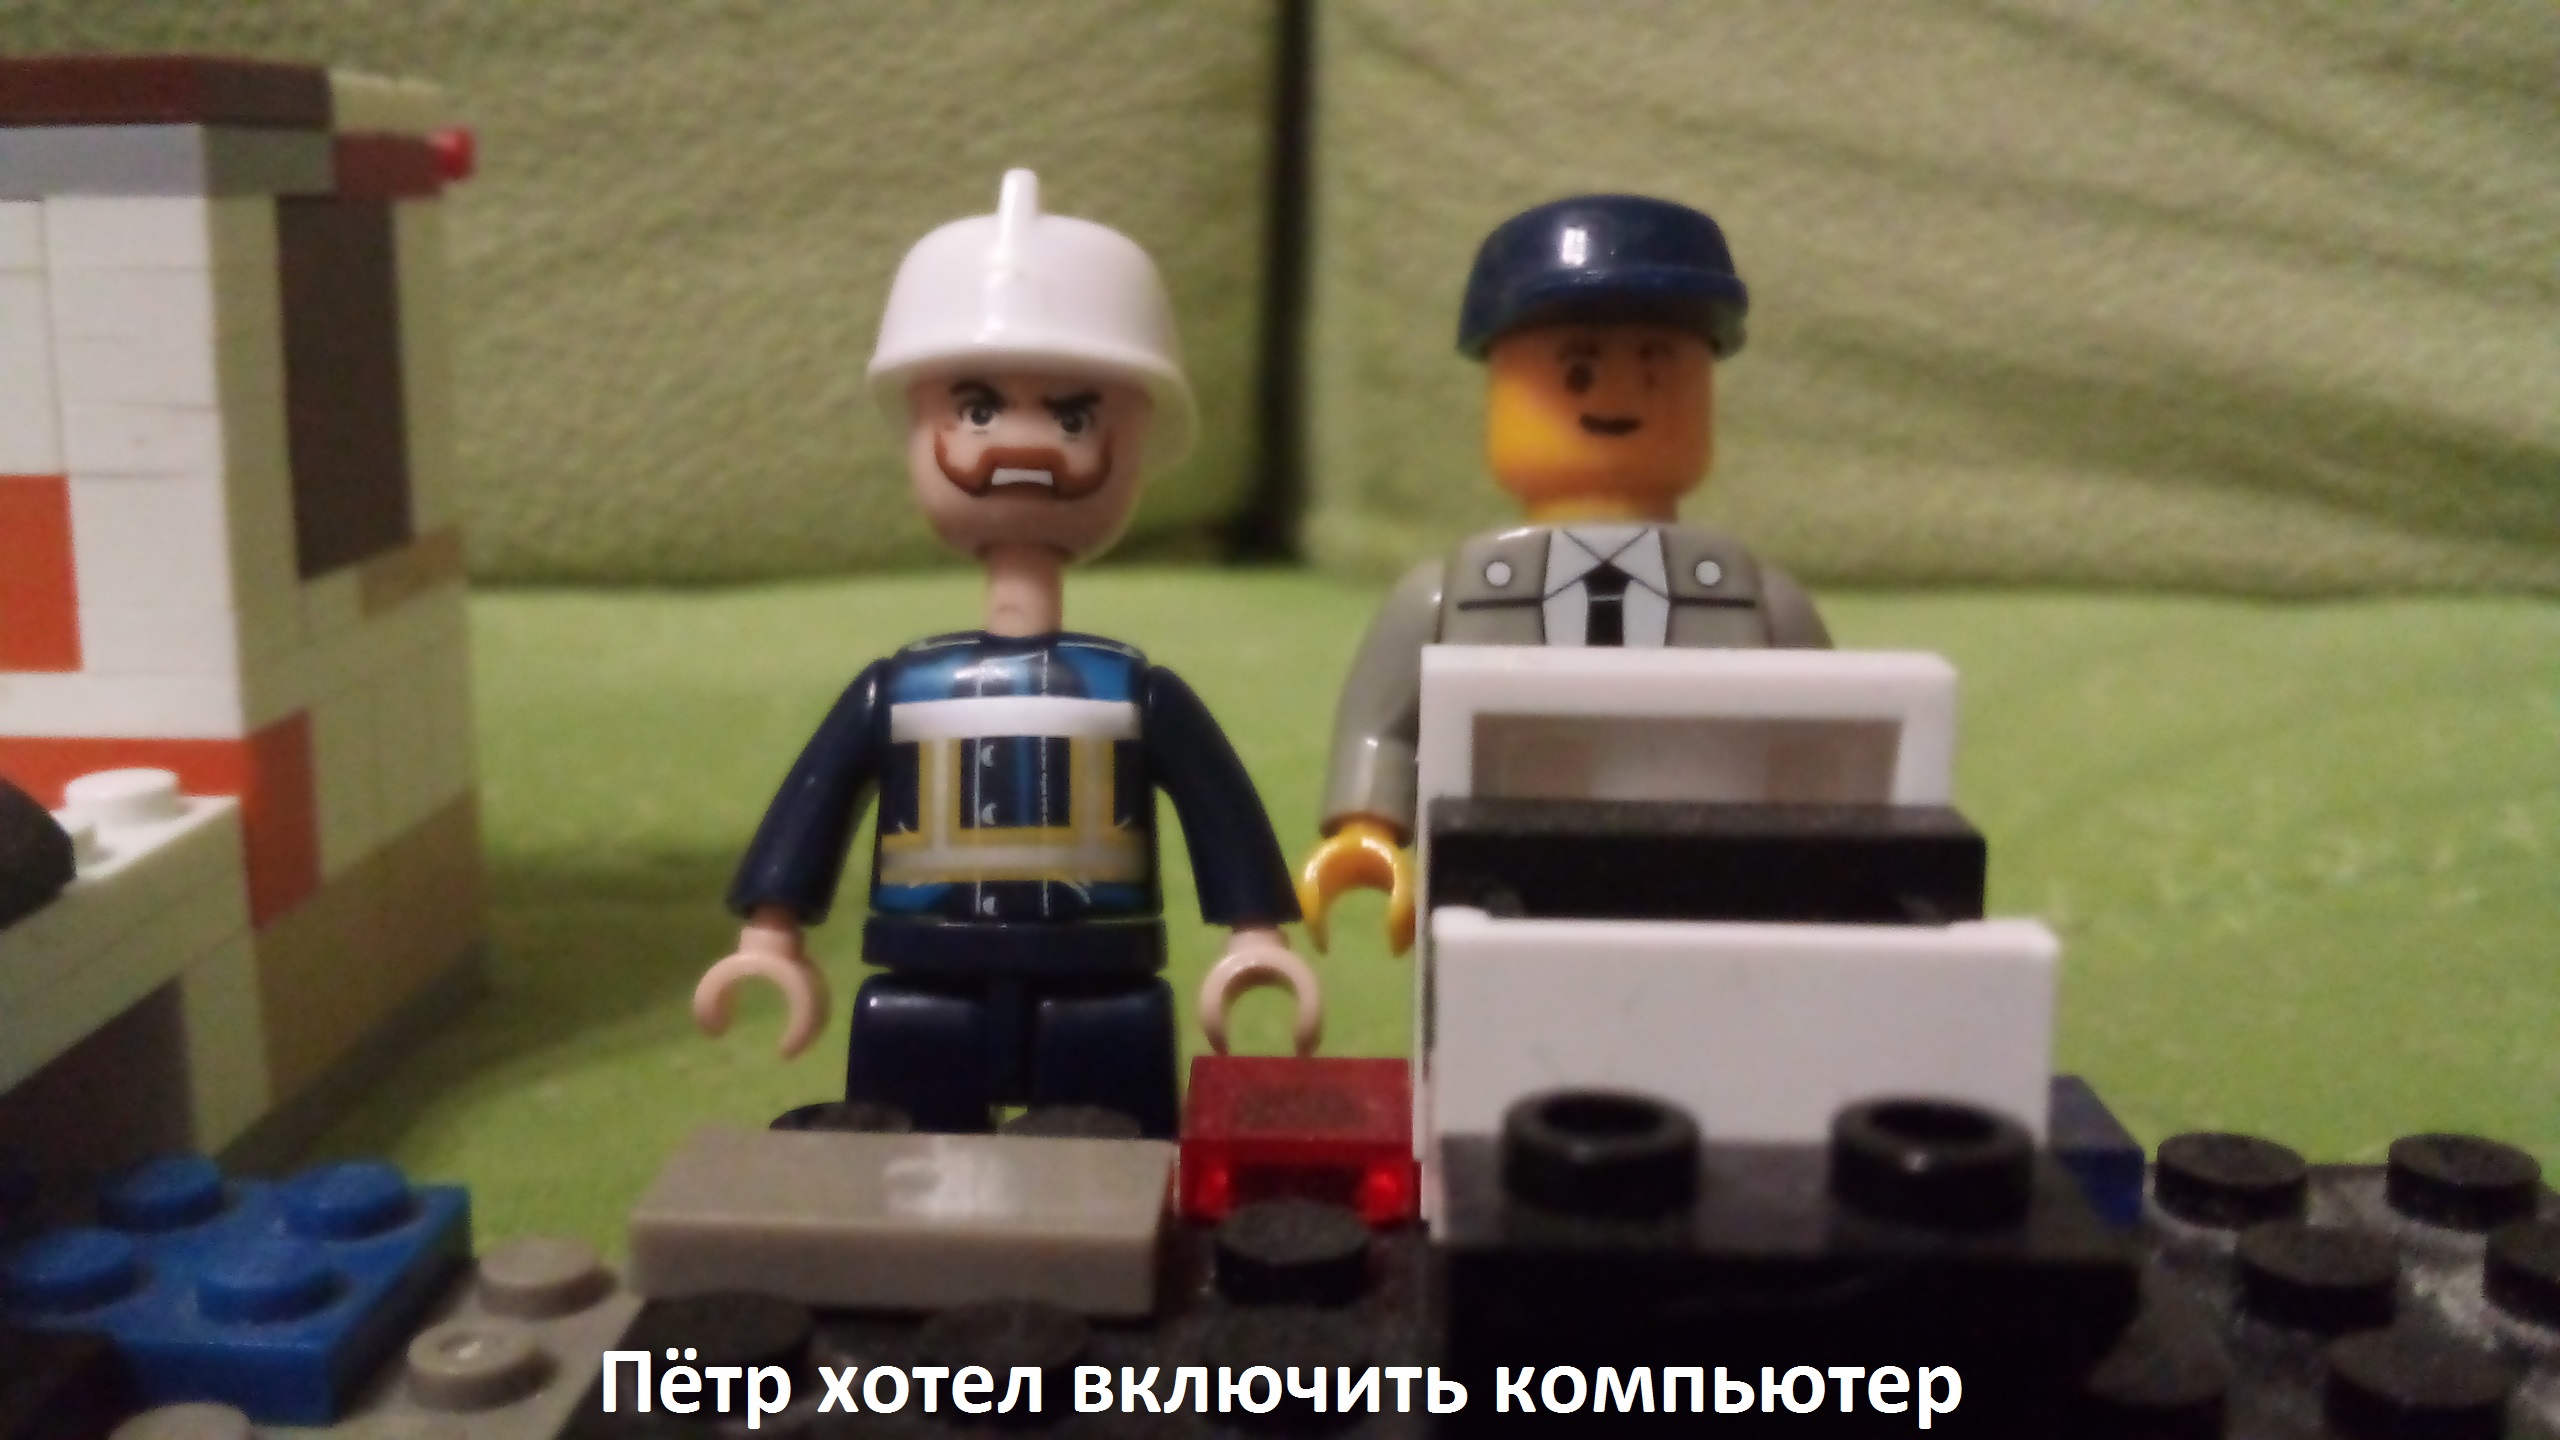 Лего мультик "Пётр хотел включить компьютер"